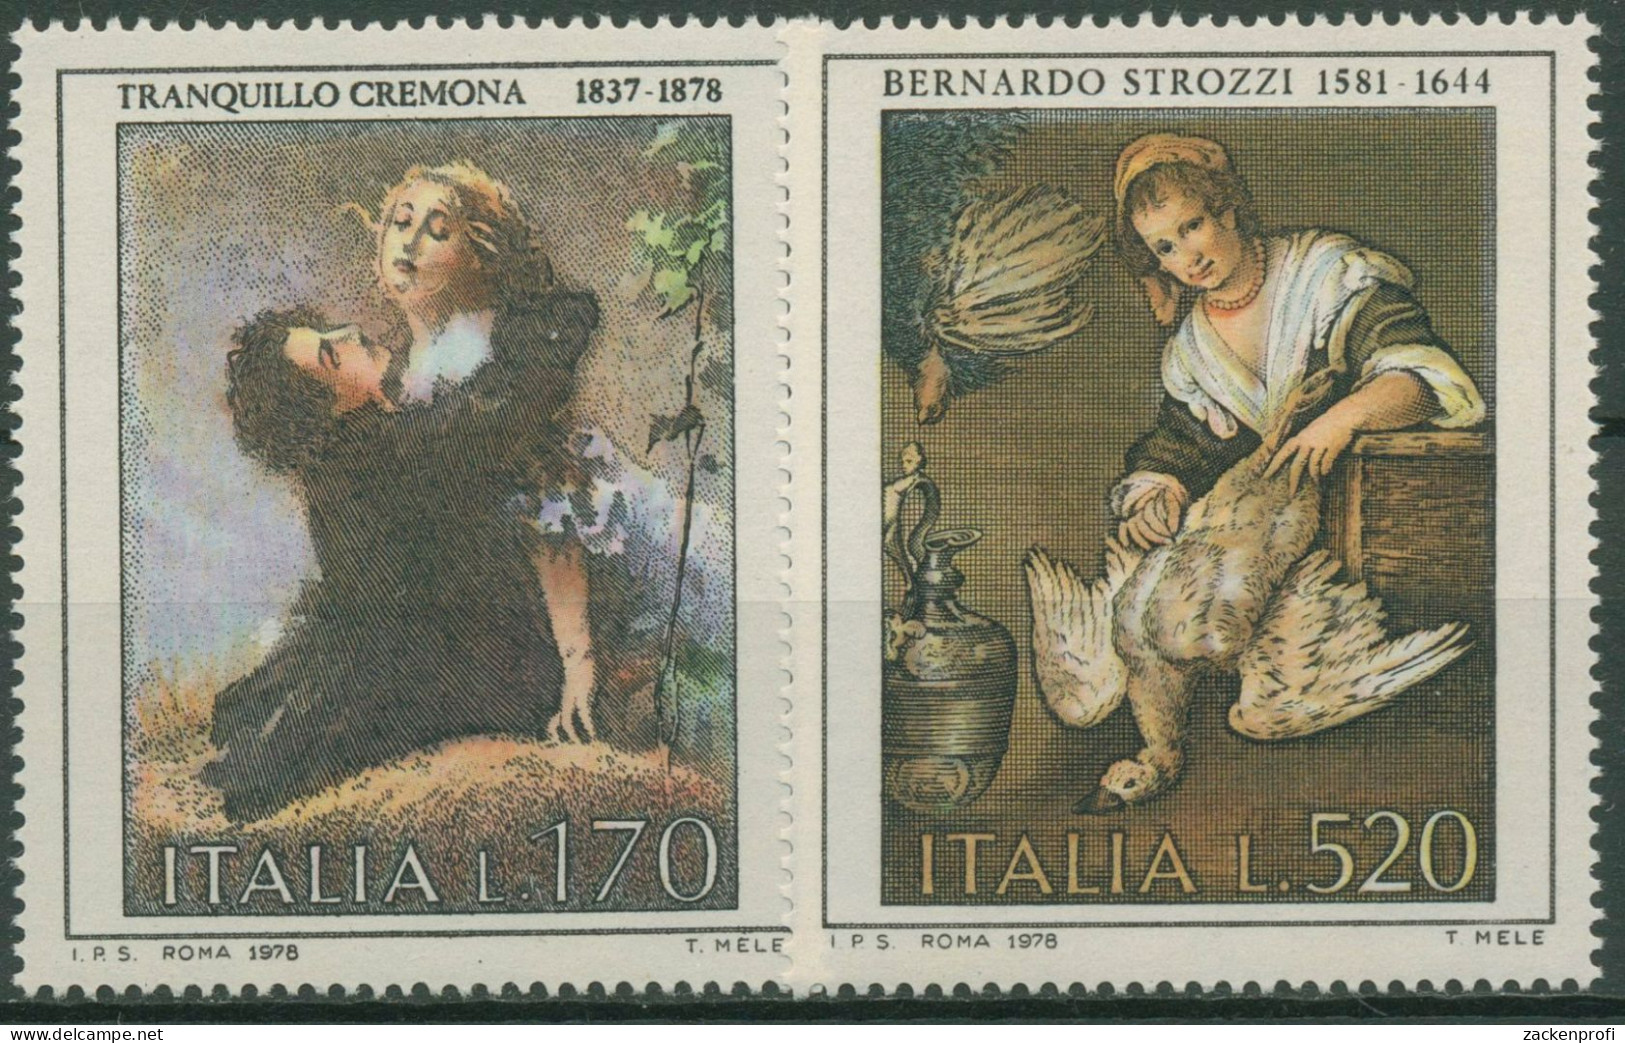 Italien 1978 Italienische Kunst Gemälde 1621/22 Postfrisch - 1971-80: Mint/hinged